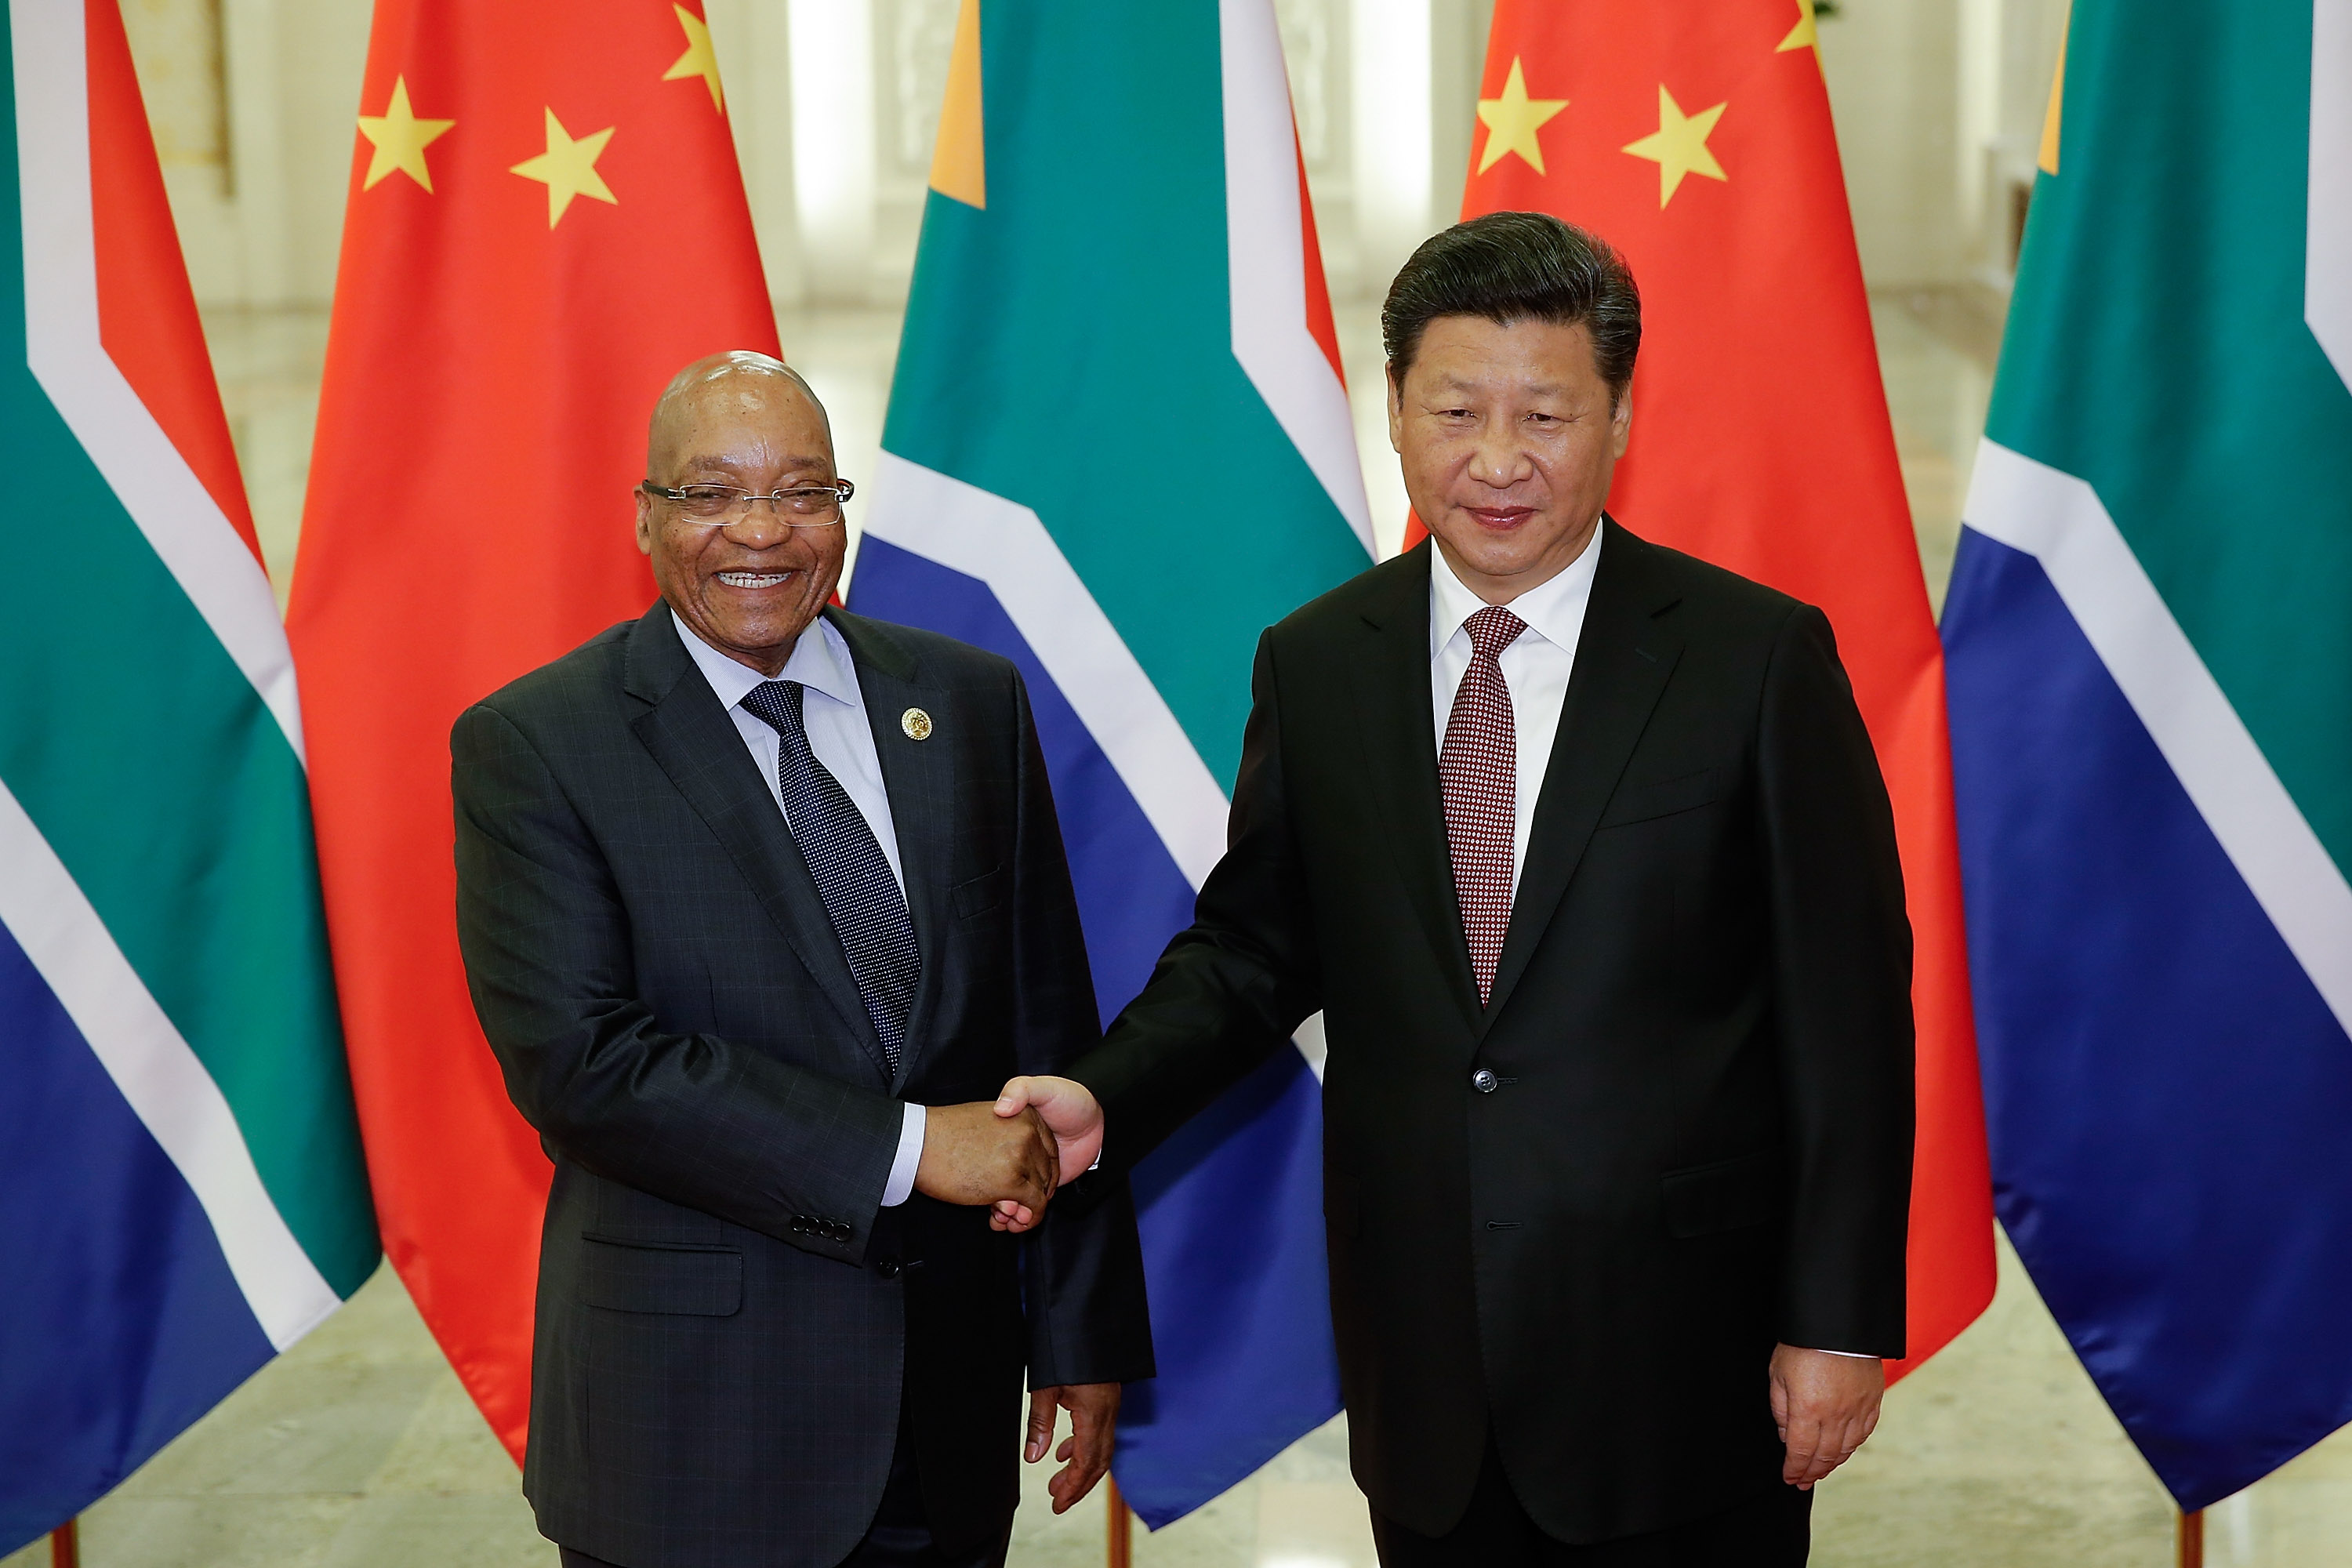 South African President Jacob Zuma Visits China